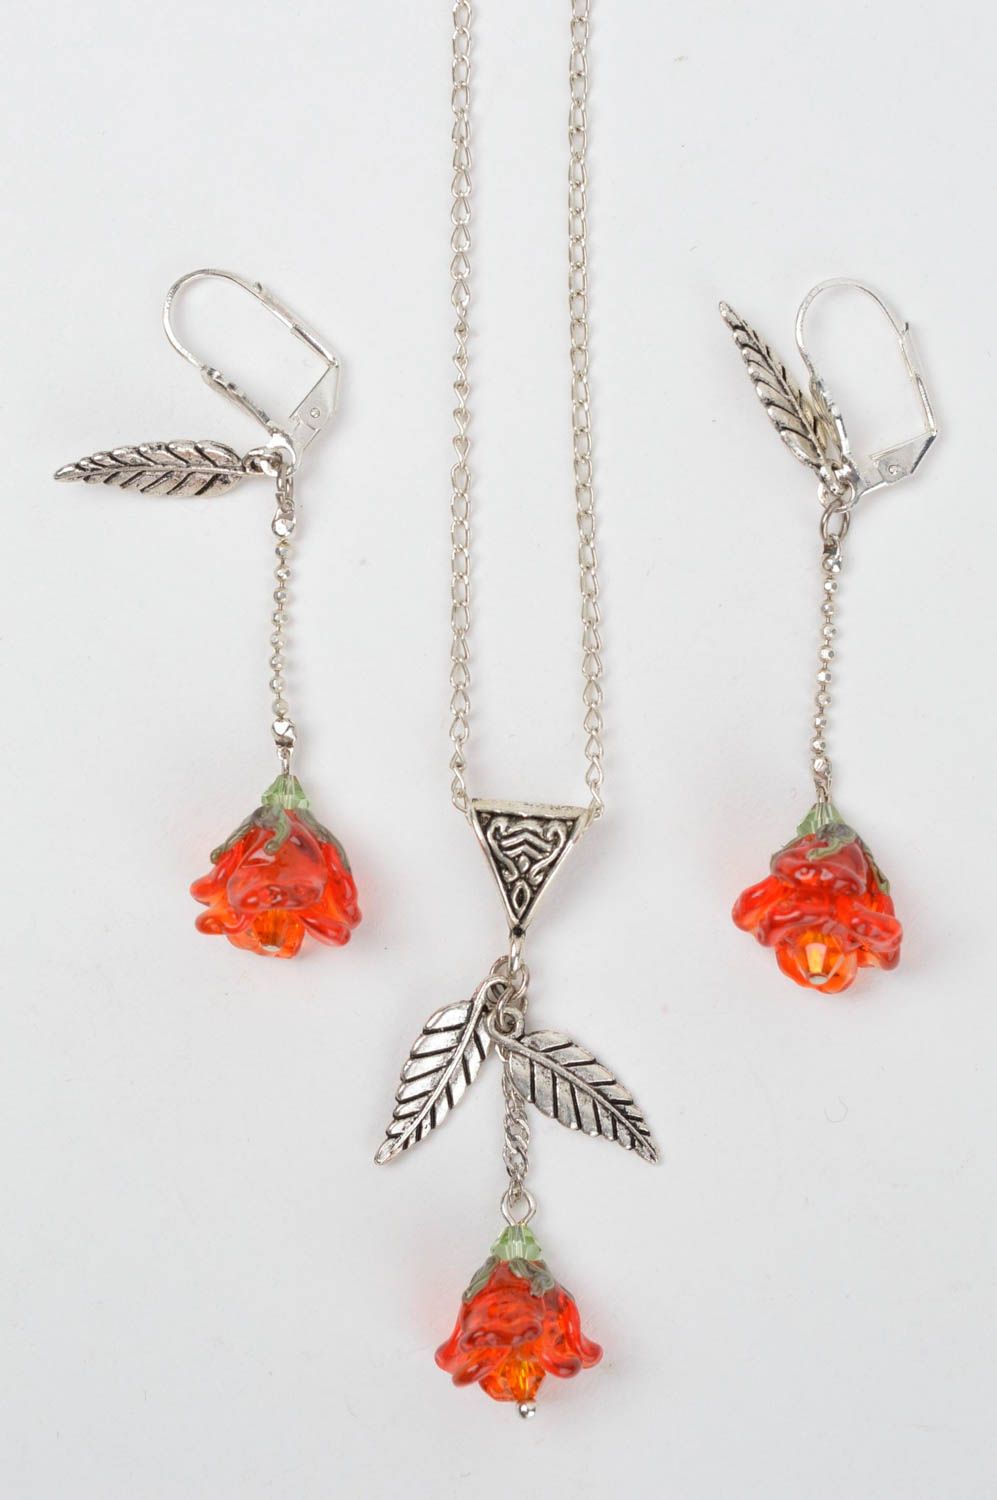 Long earrings stylish pendant flower jewelry set handmade accessories gift photo 2